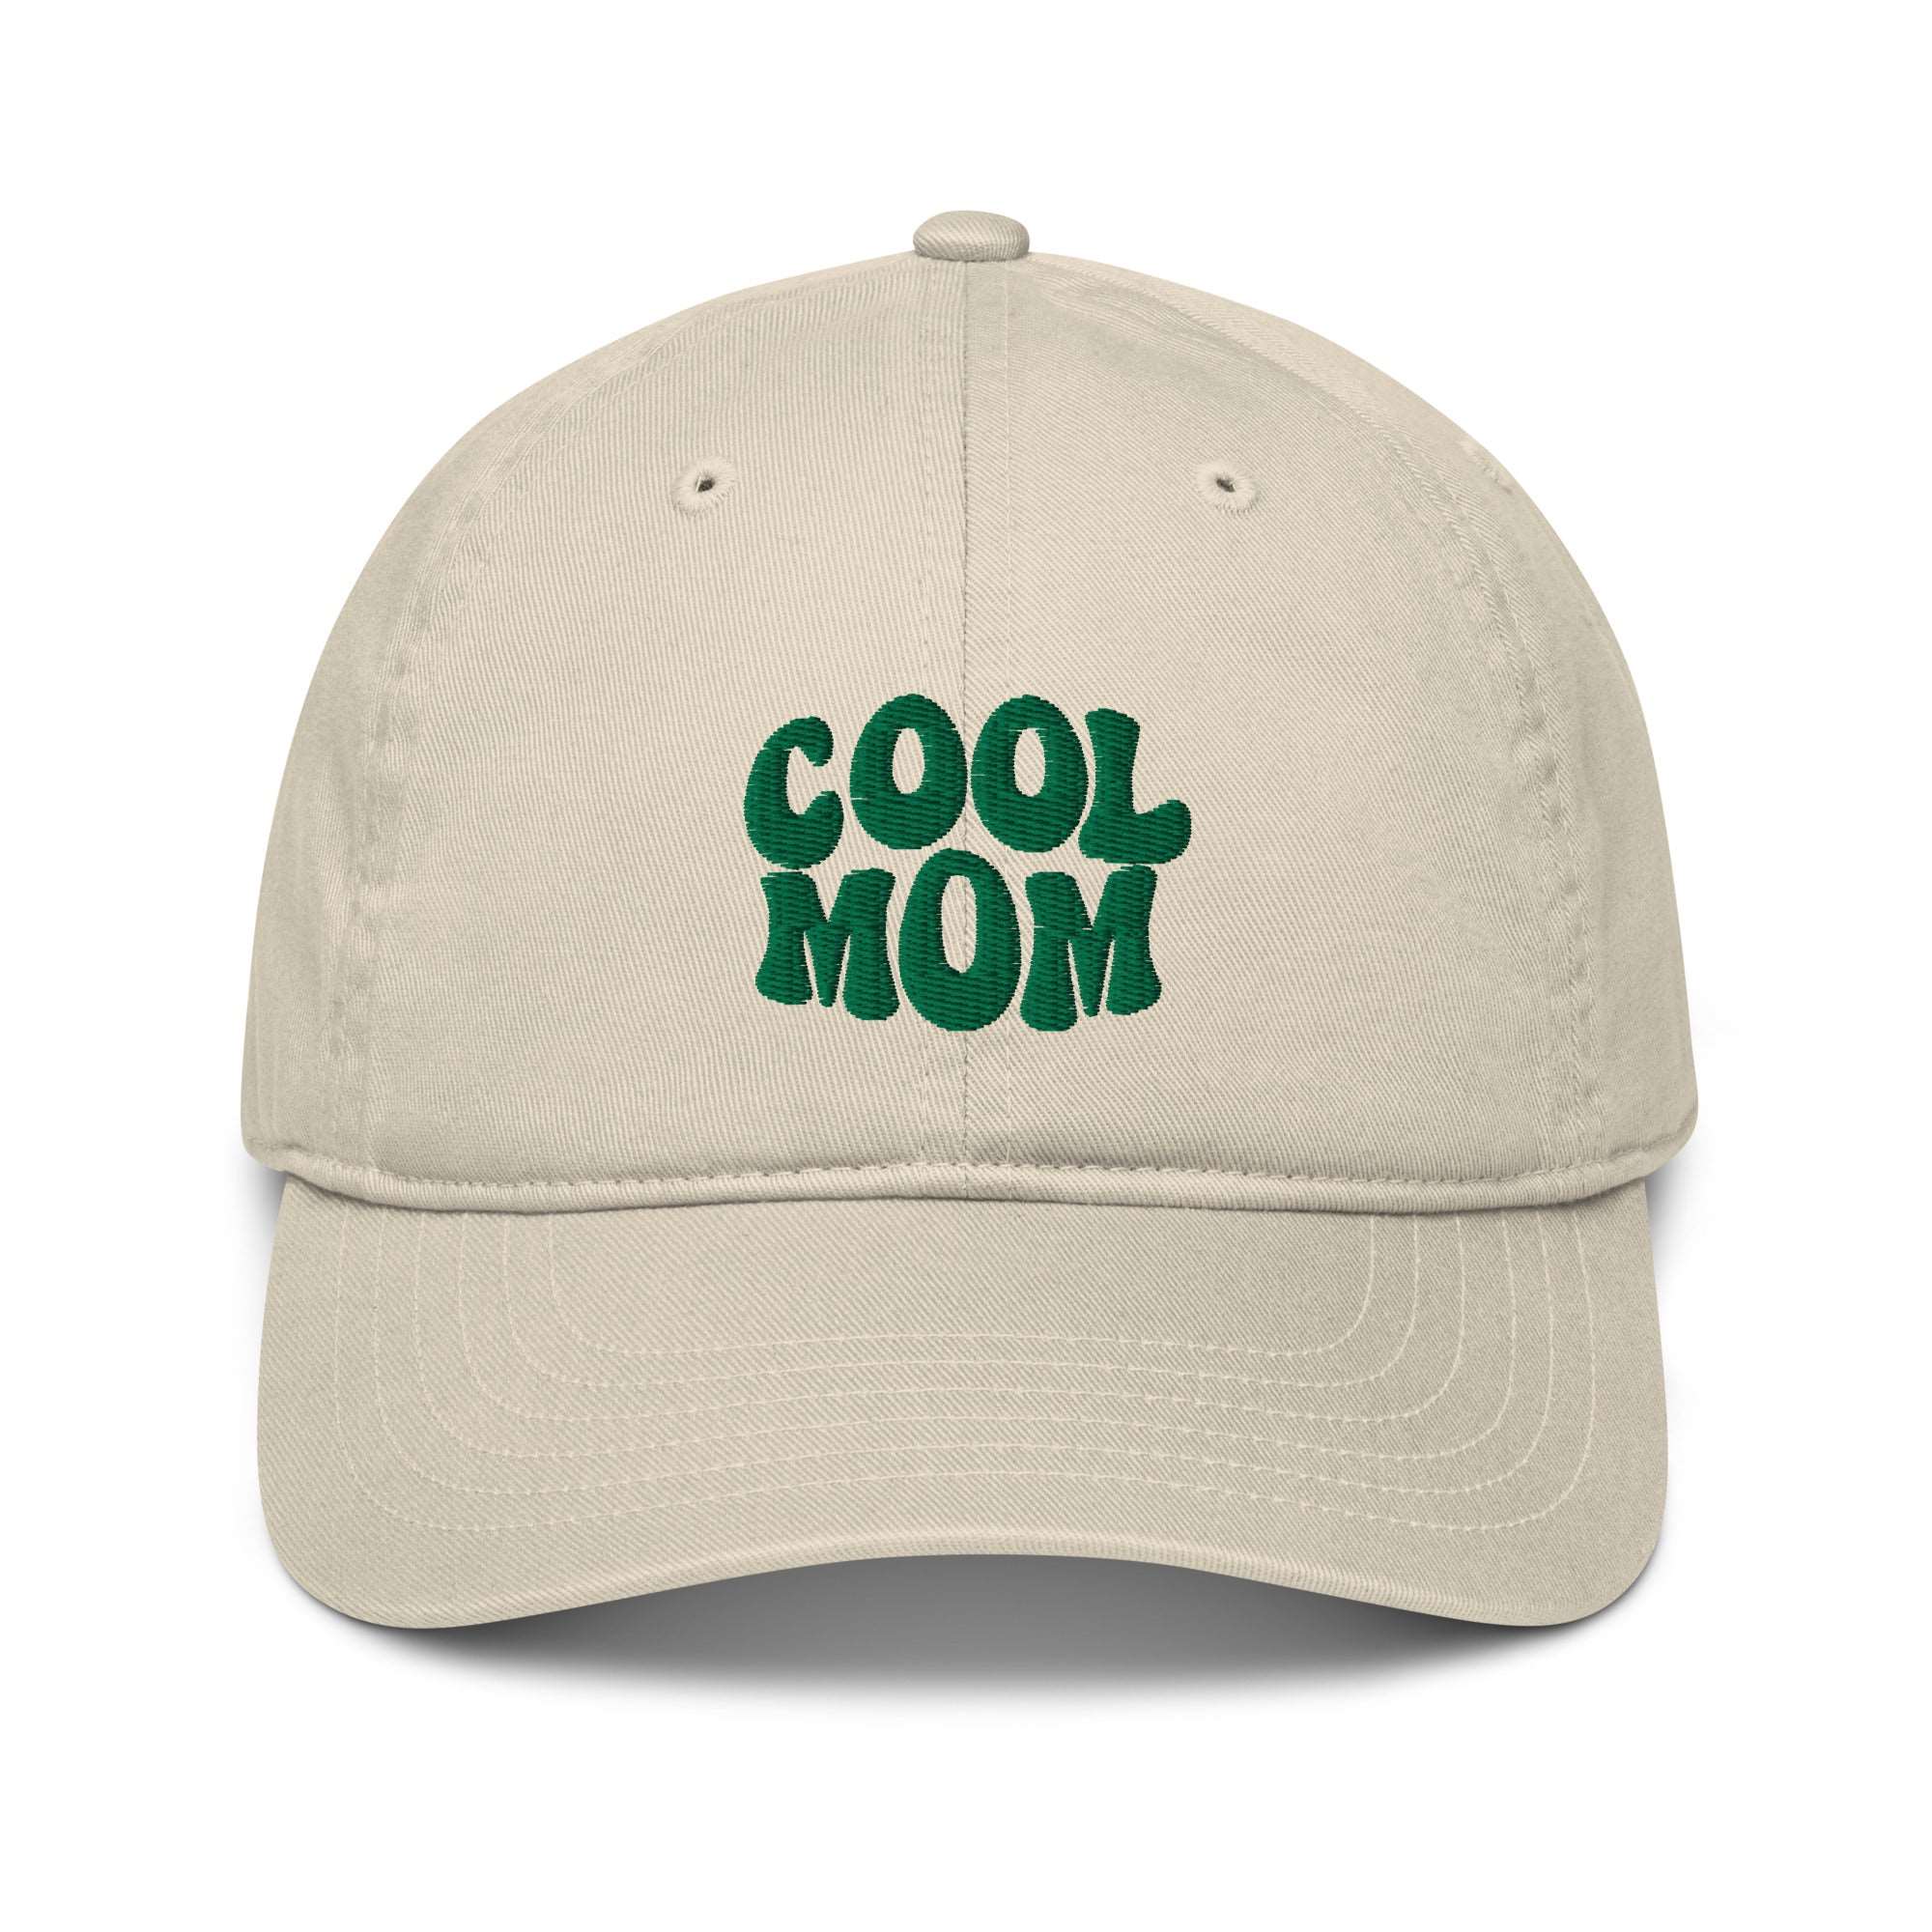 COOL MOM eco baseball hat